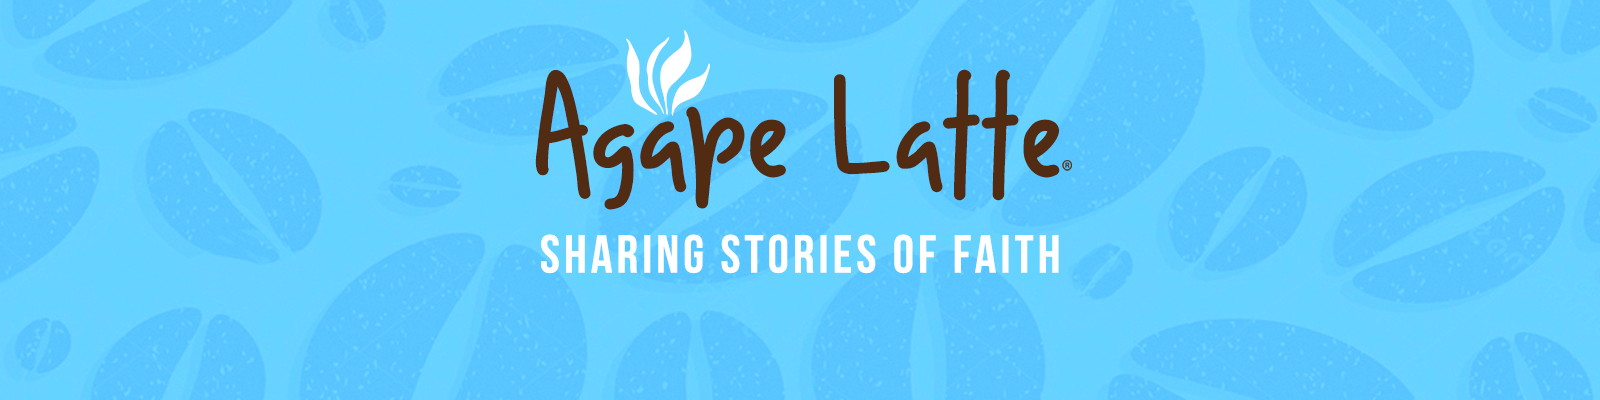 Agape Latte | The Podcast